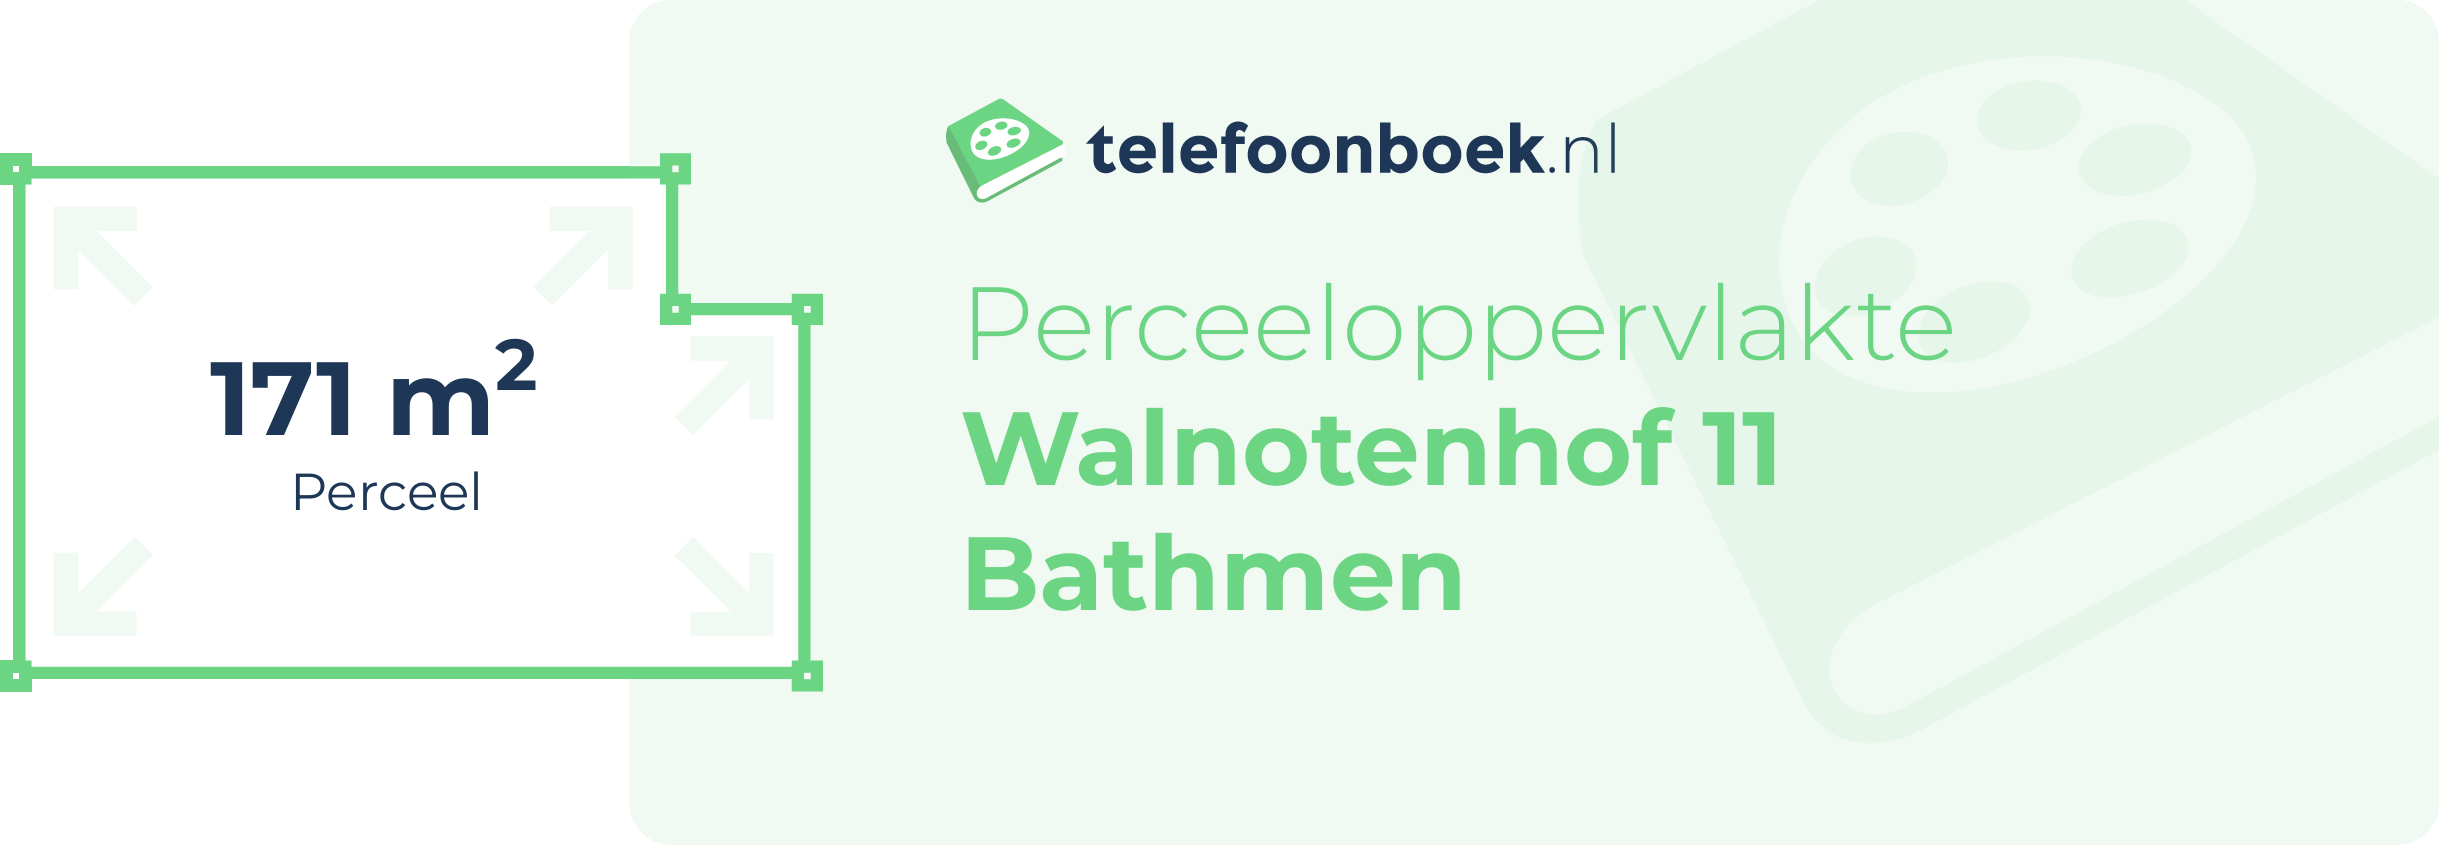 Perceeloppervlakte Walnotenhof 11 Bathmen